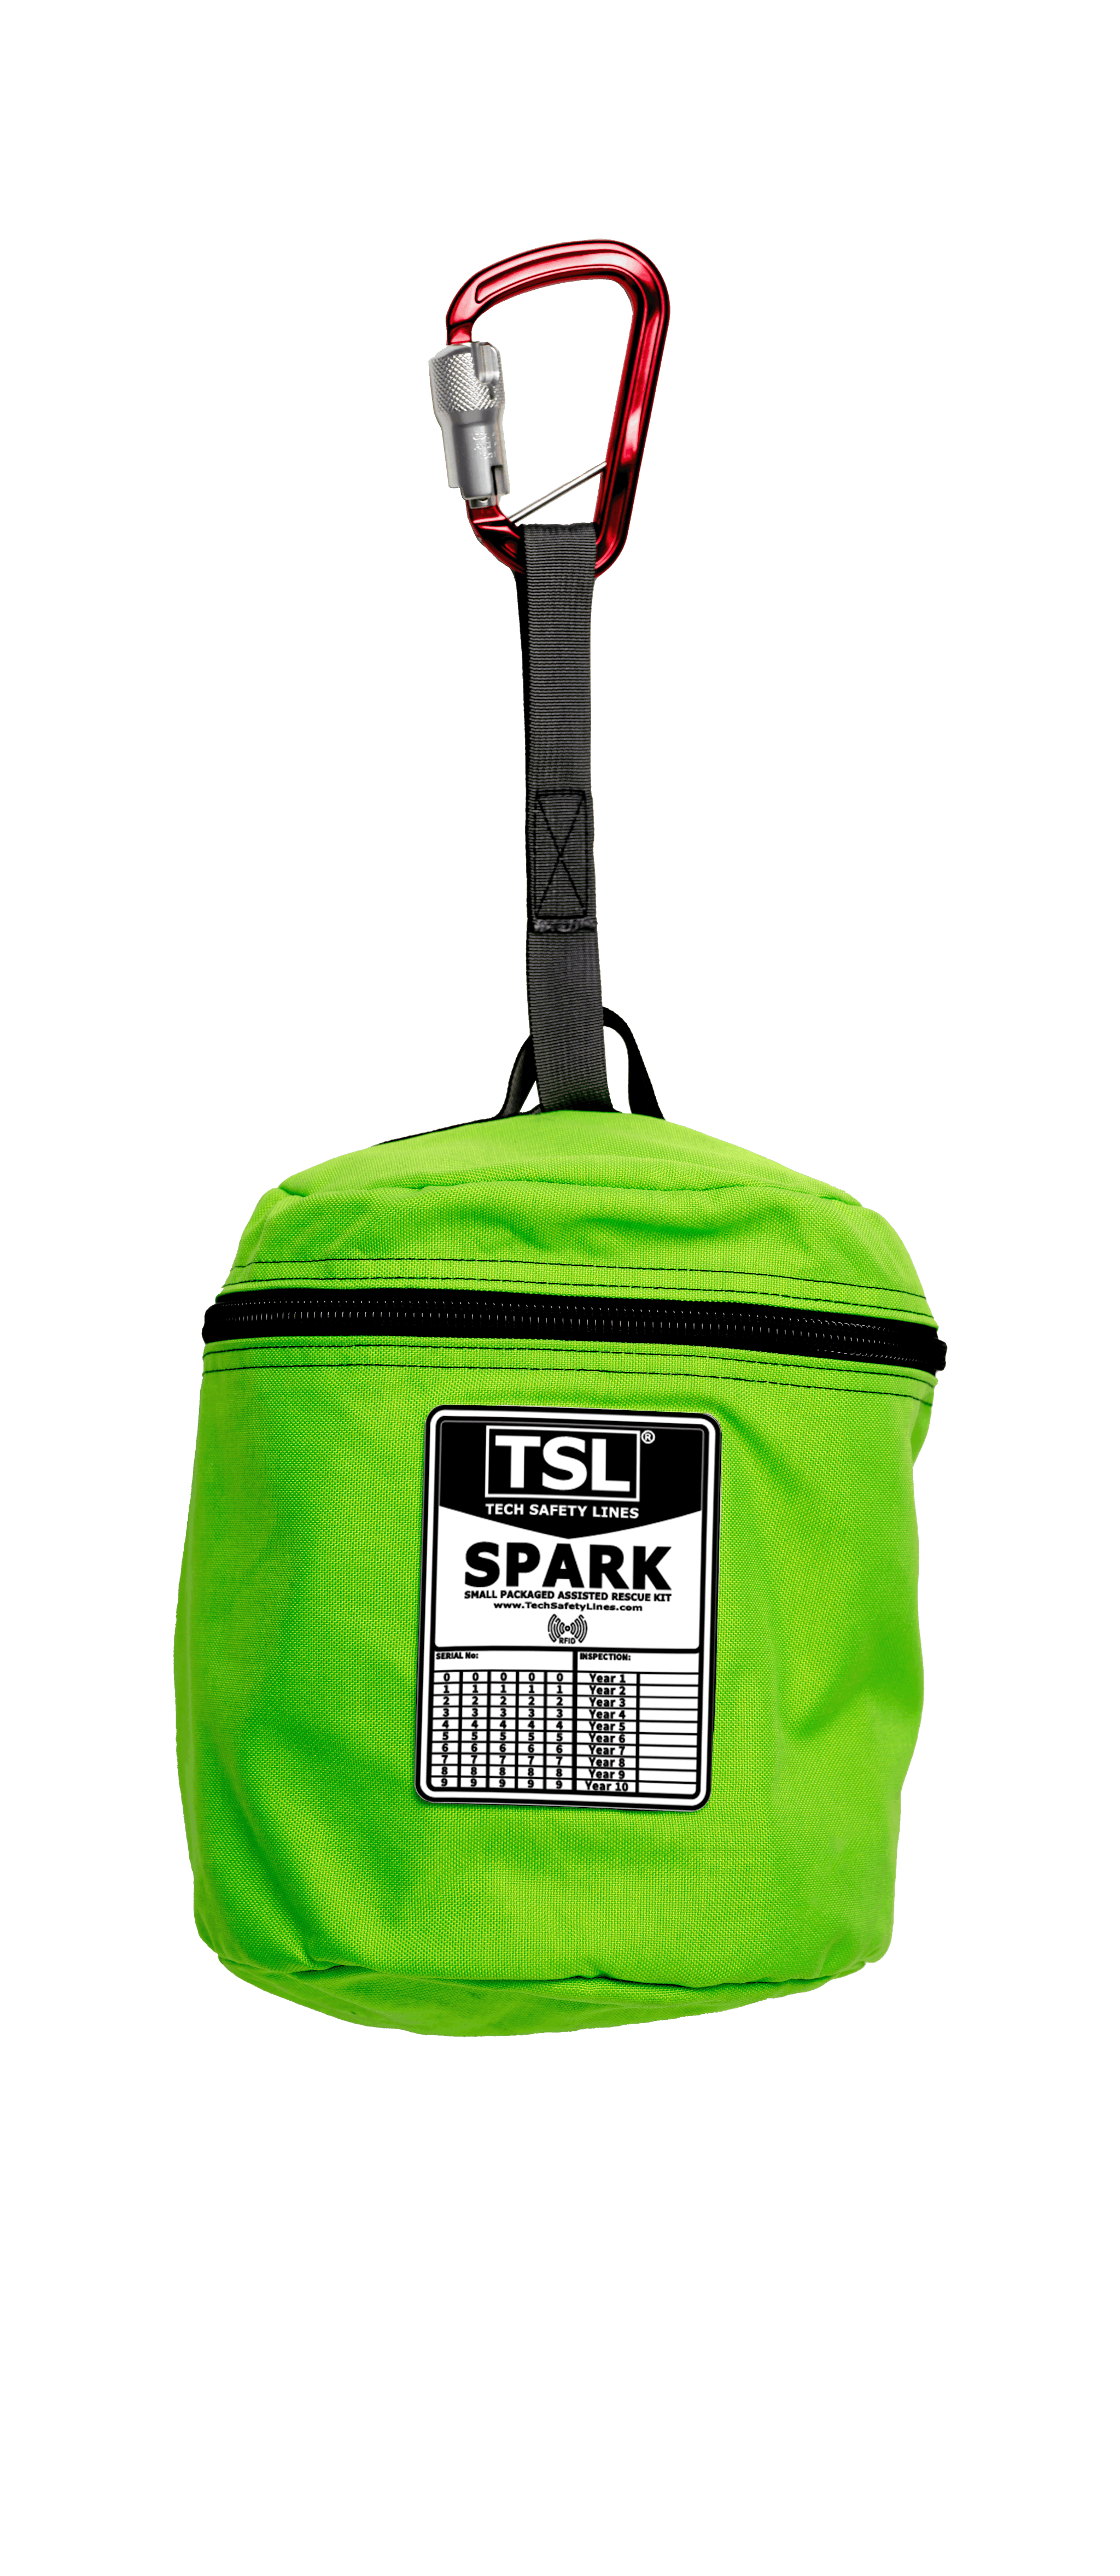 Spark bag